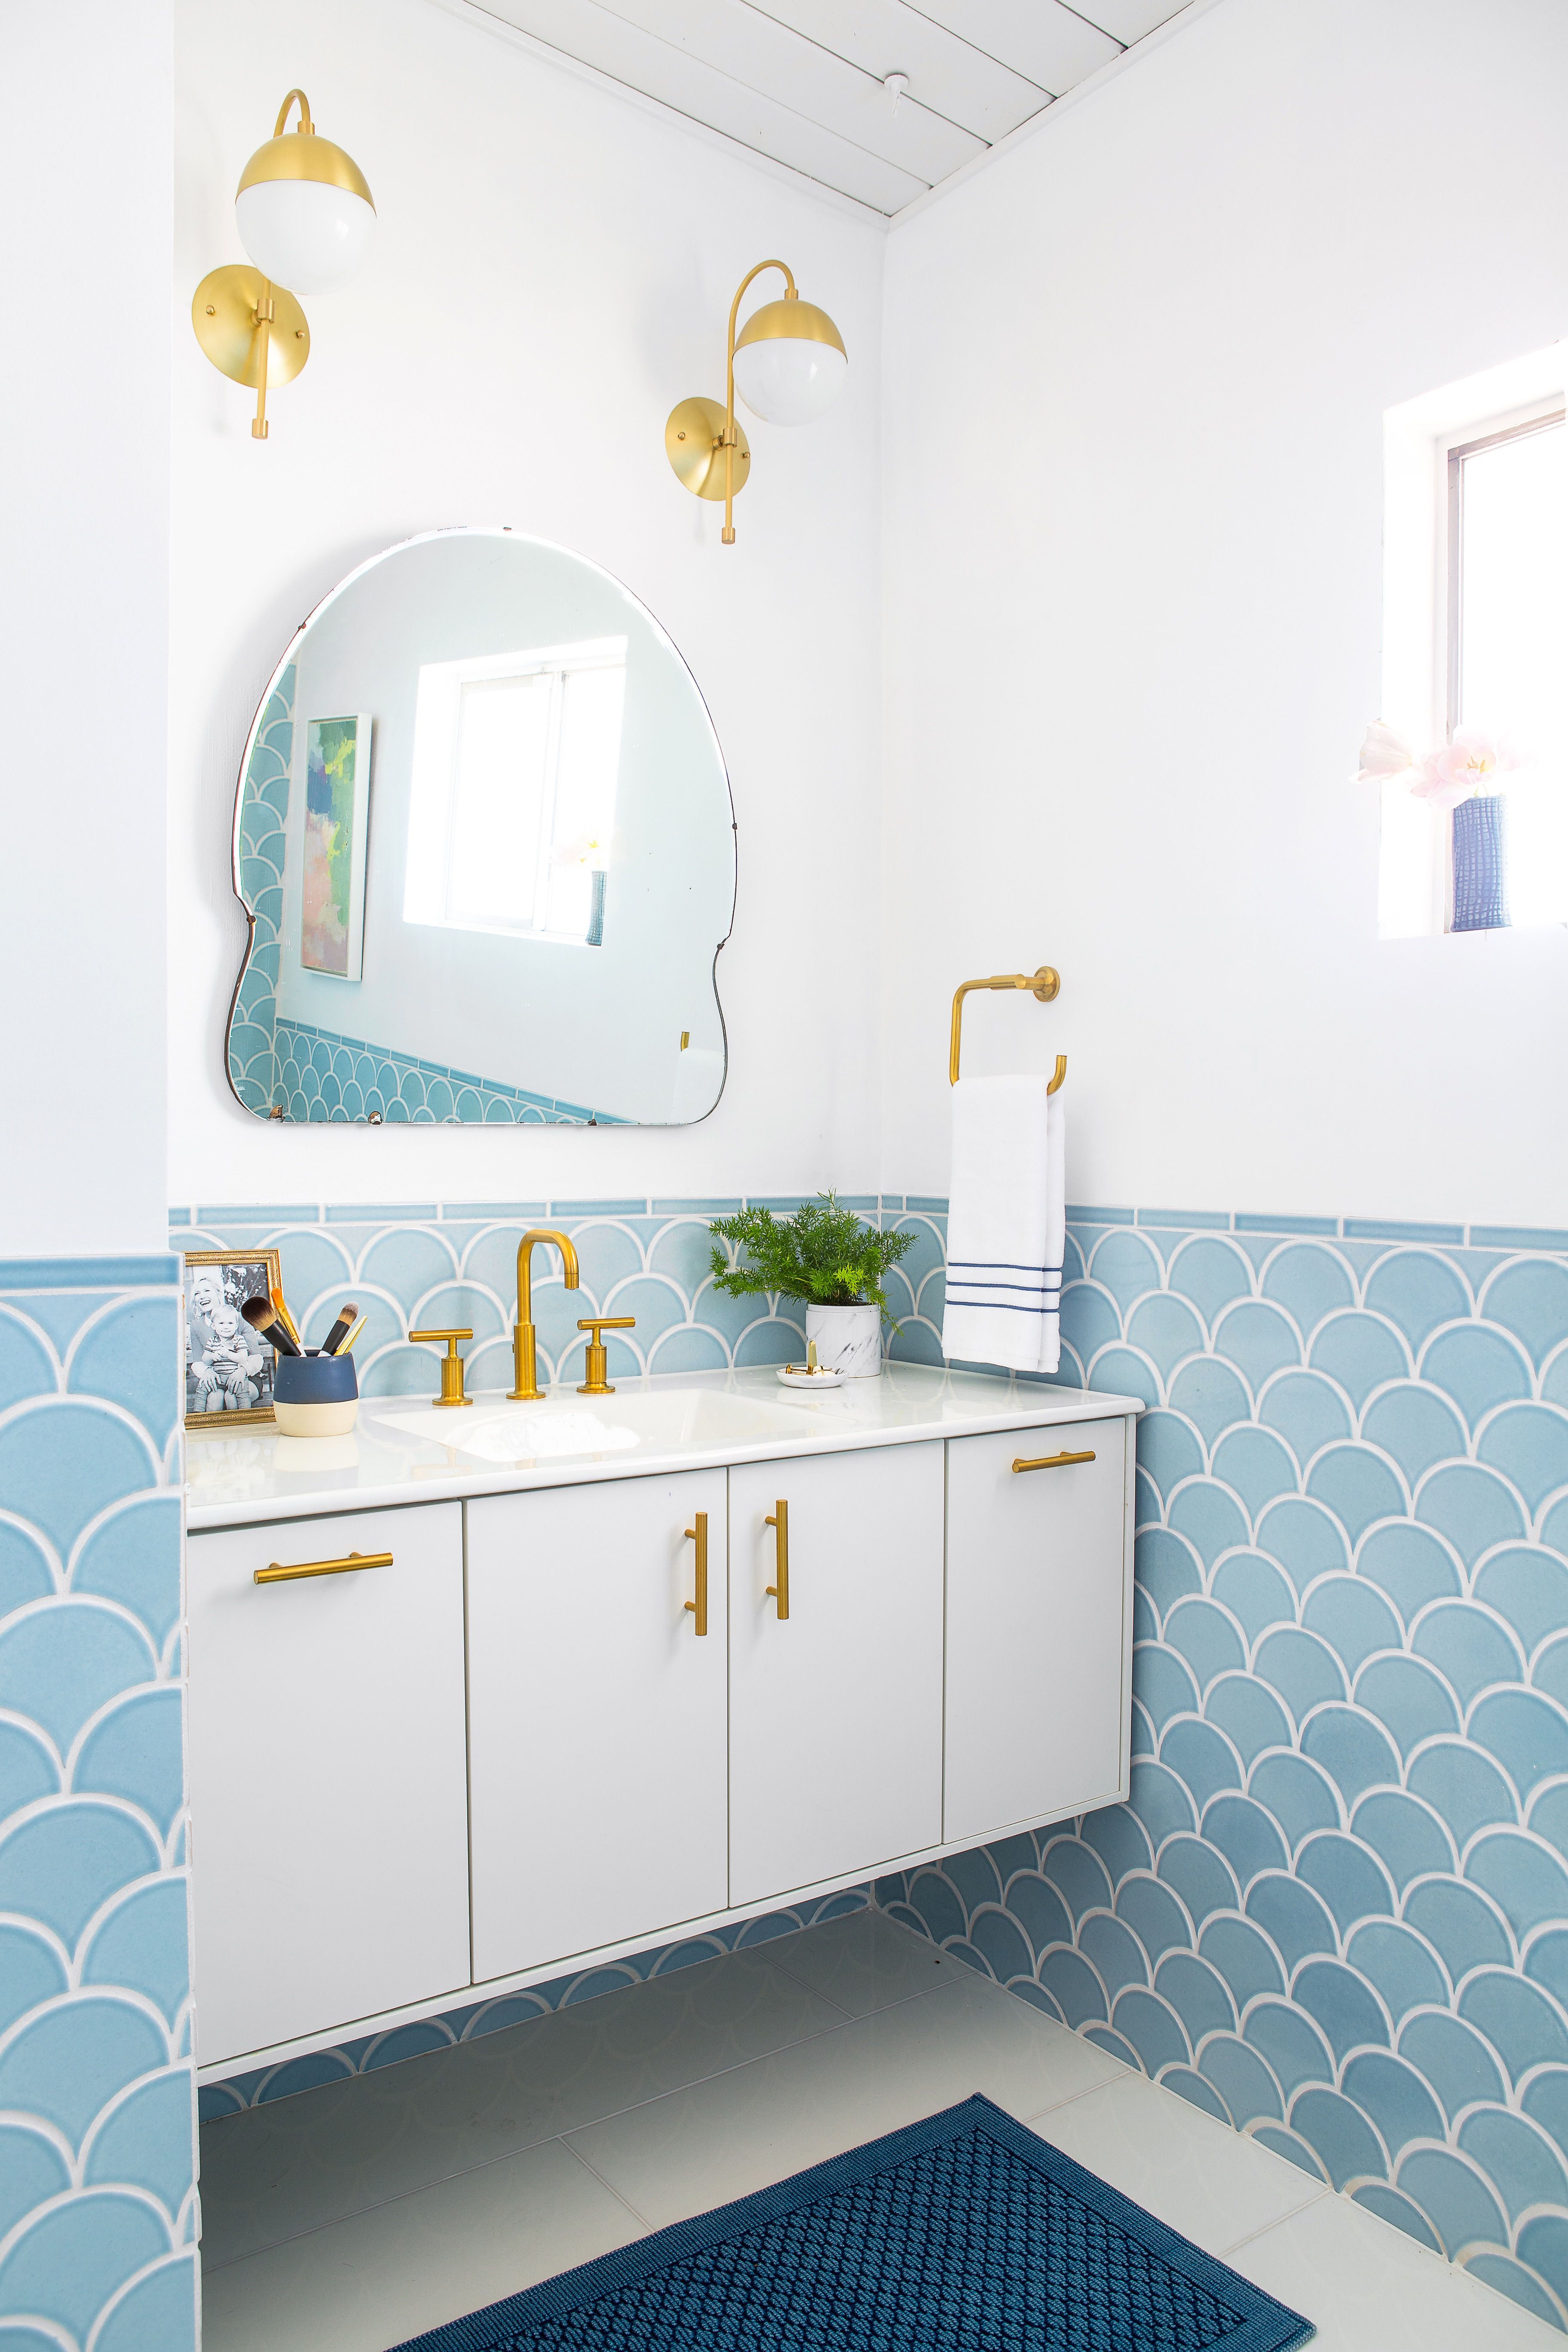 Design bathroom tiles 30+ bathroom tile design ideas - tile backsplash and floor designs for  bathrooms BAWLHYU